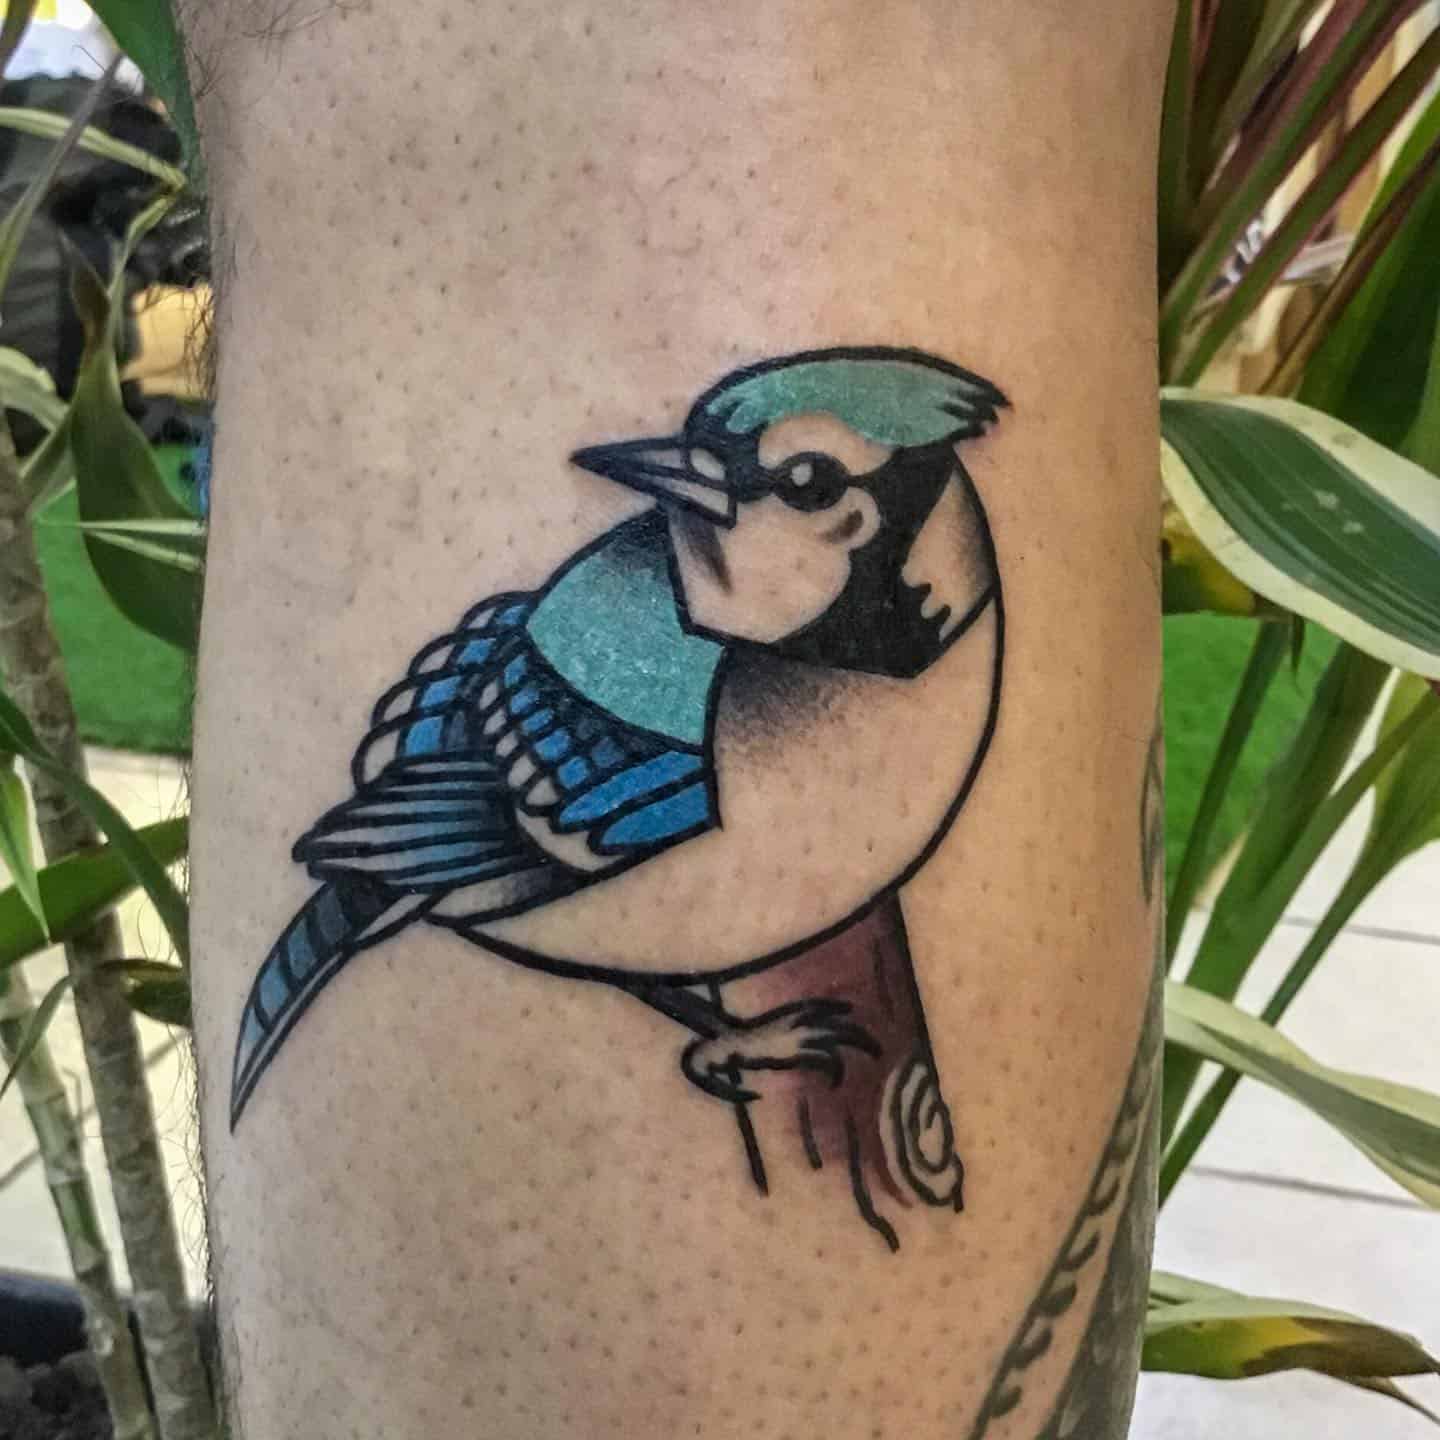 Jaybird Tattoos Meaning 2